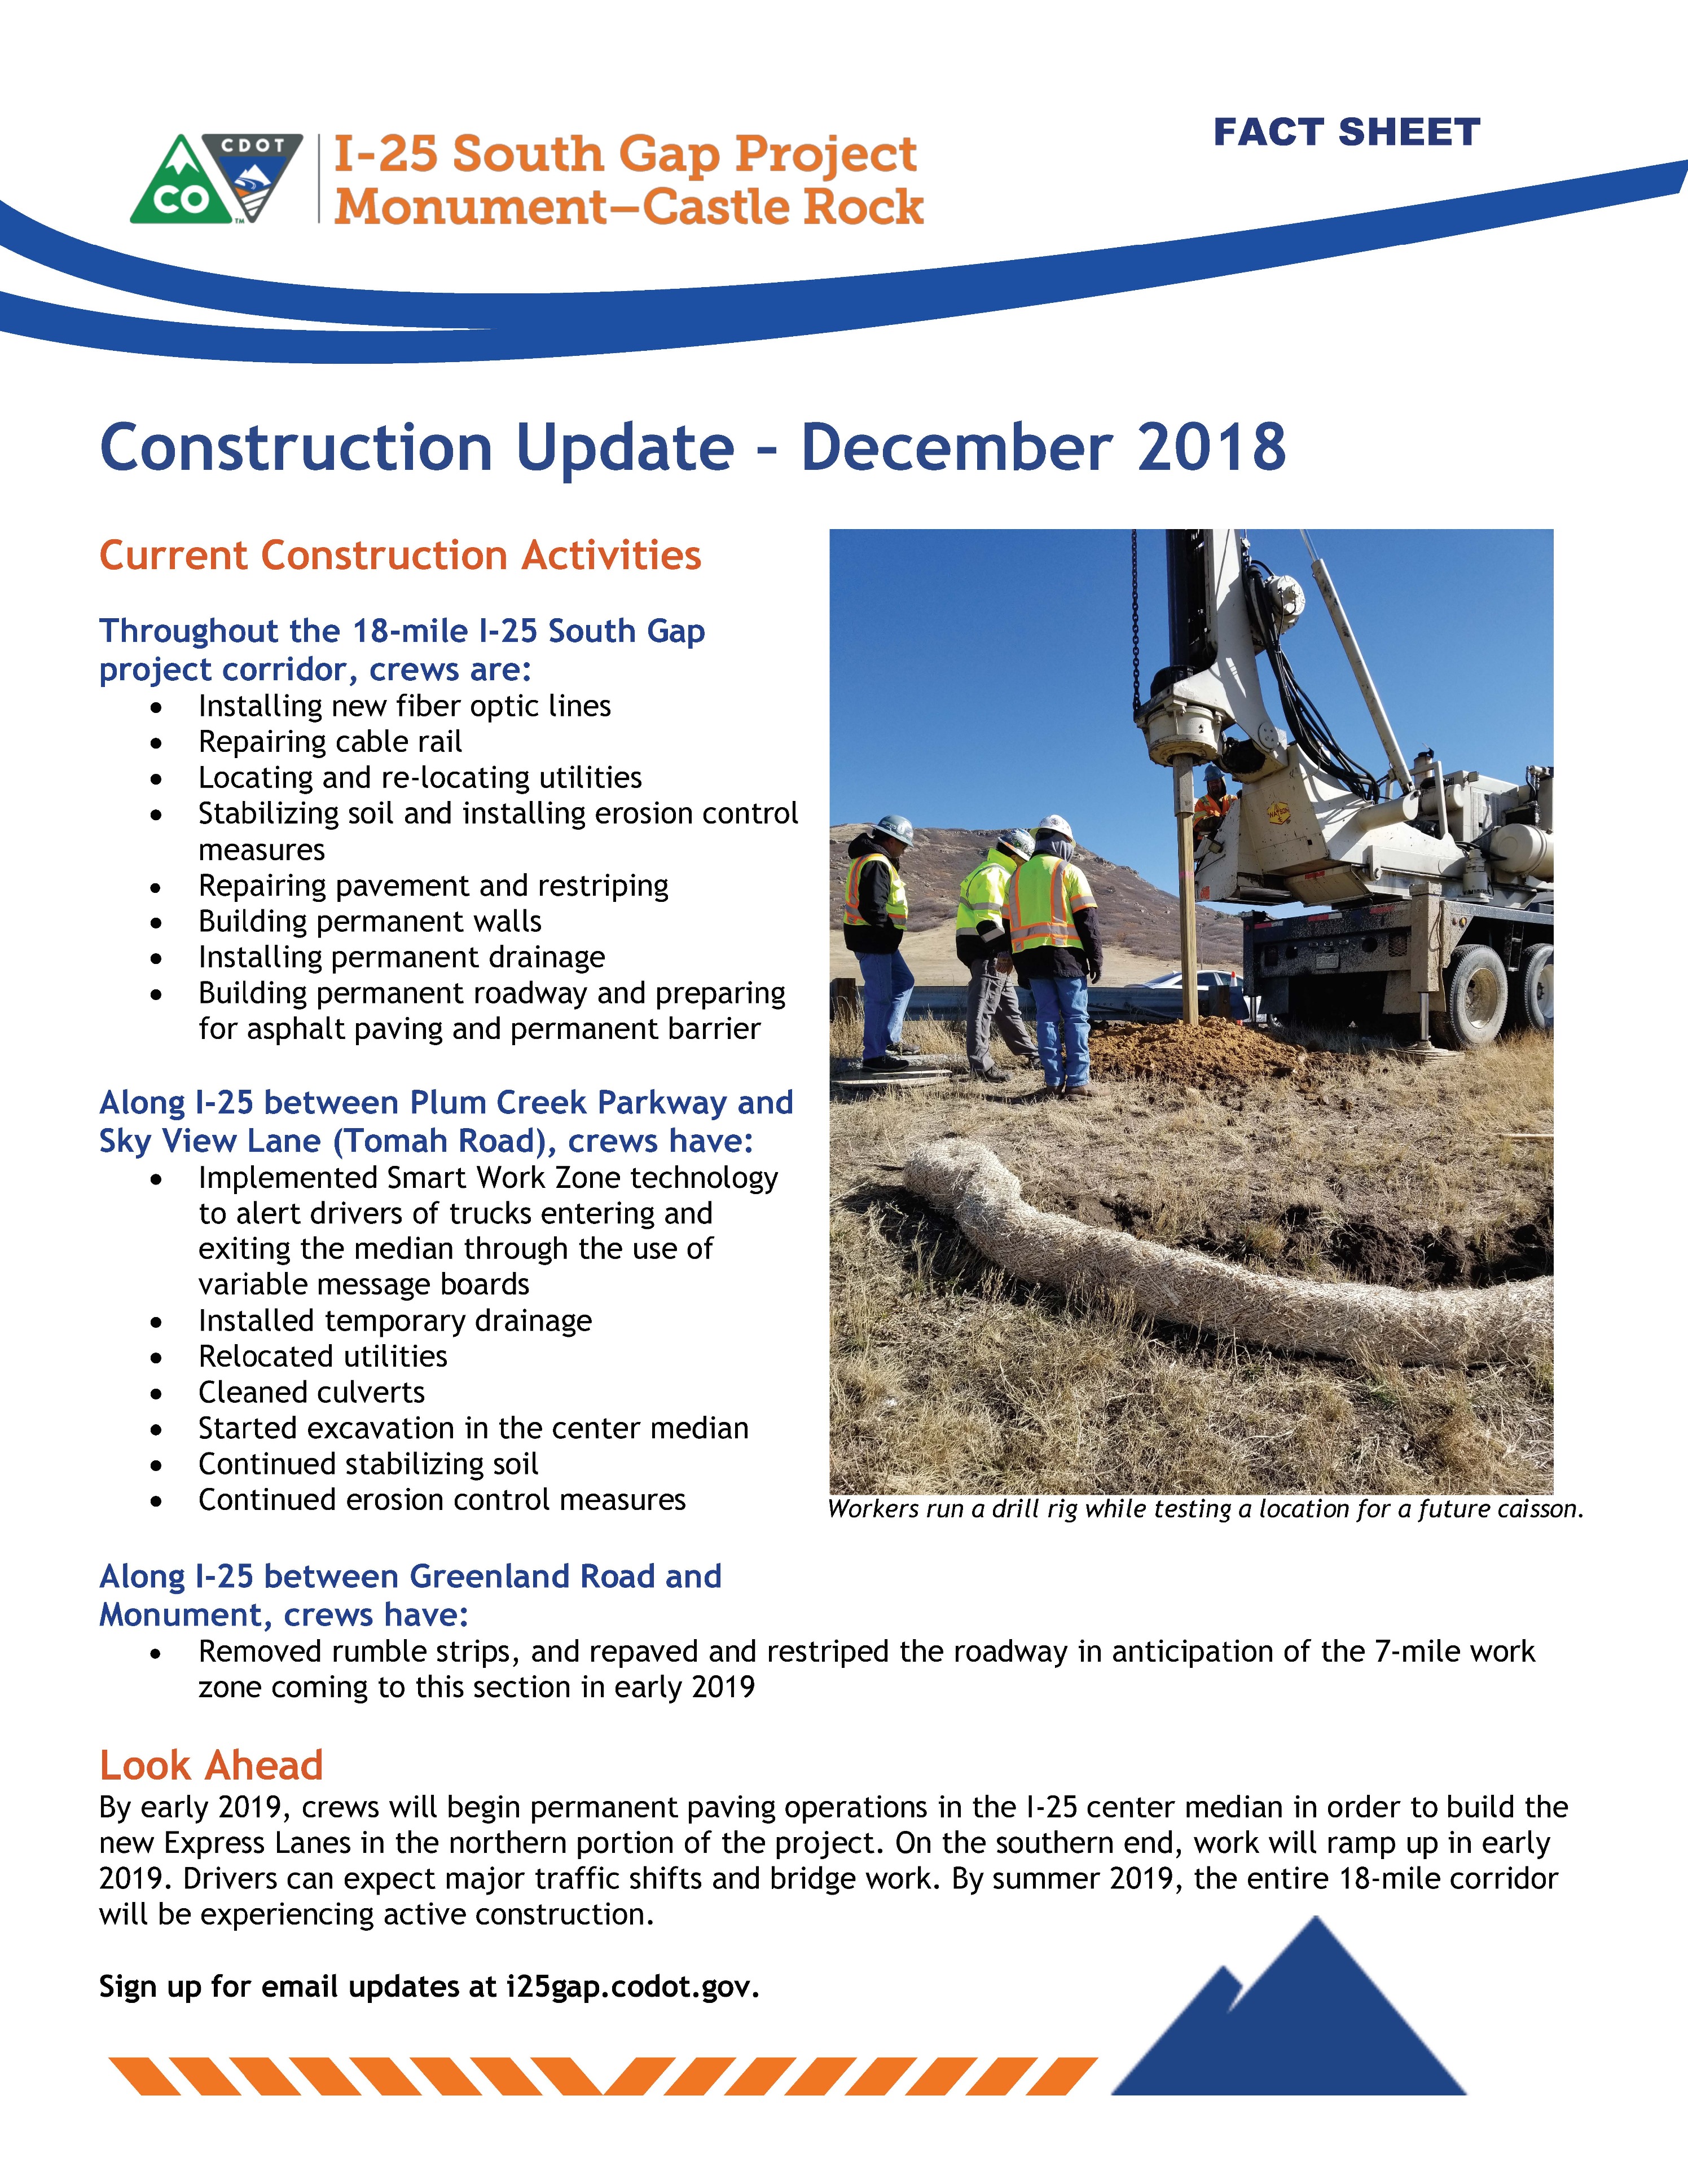 ConstructionFactSheet_December2018IMAGE.jpg detail image